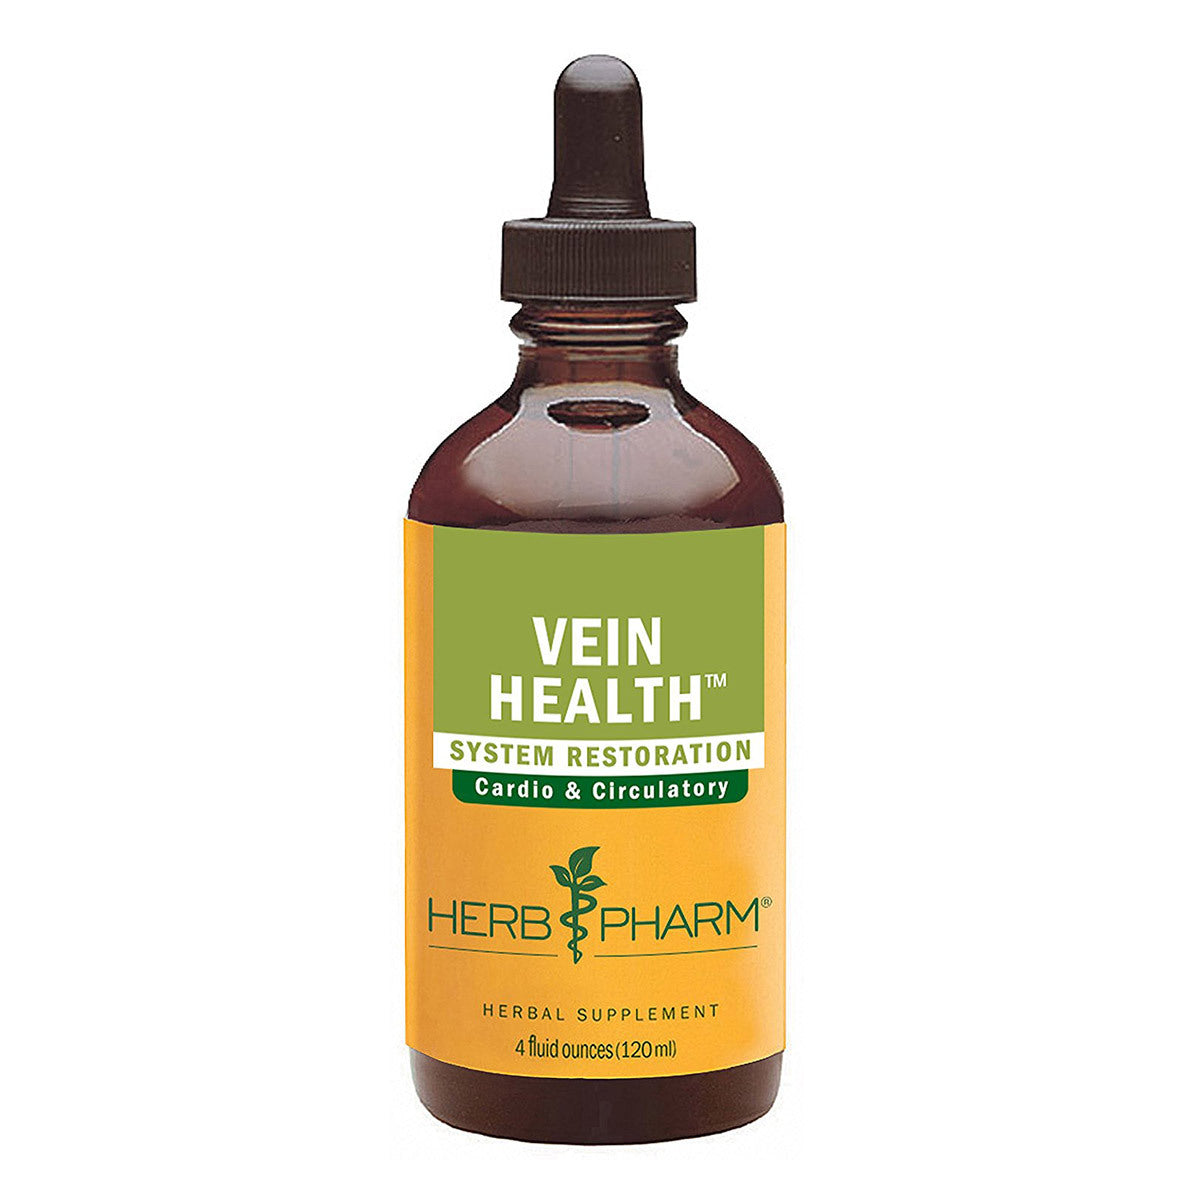 Primary image of Vein Health